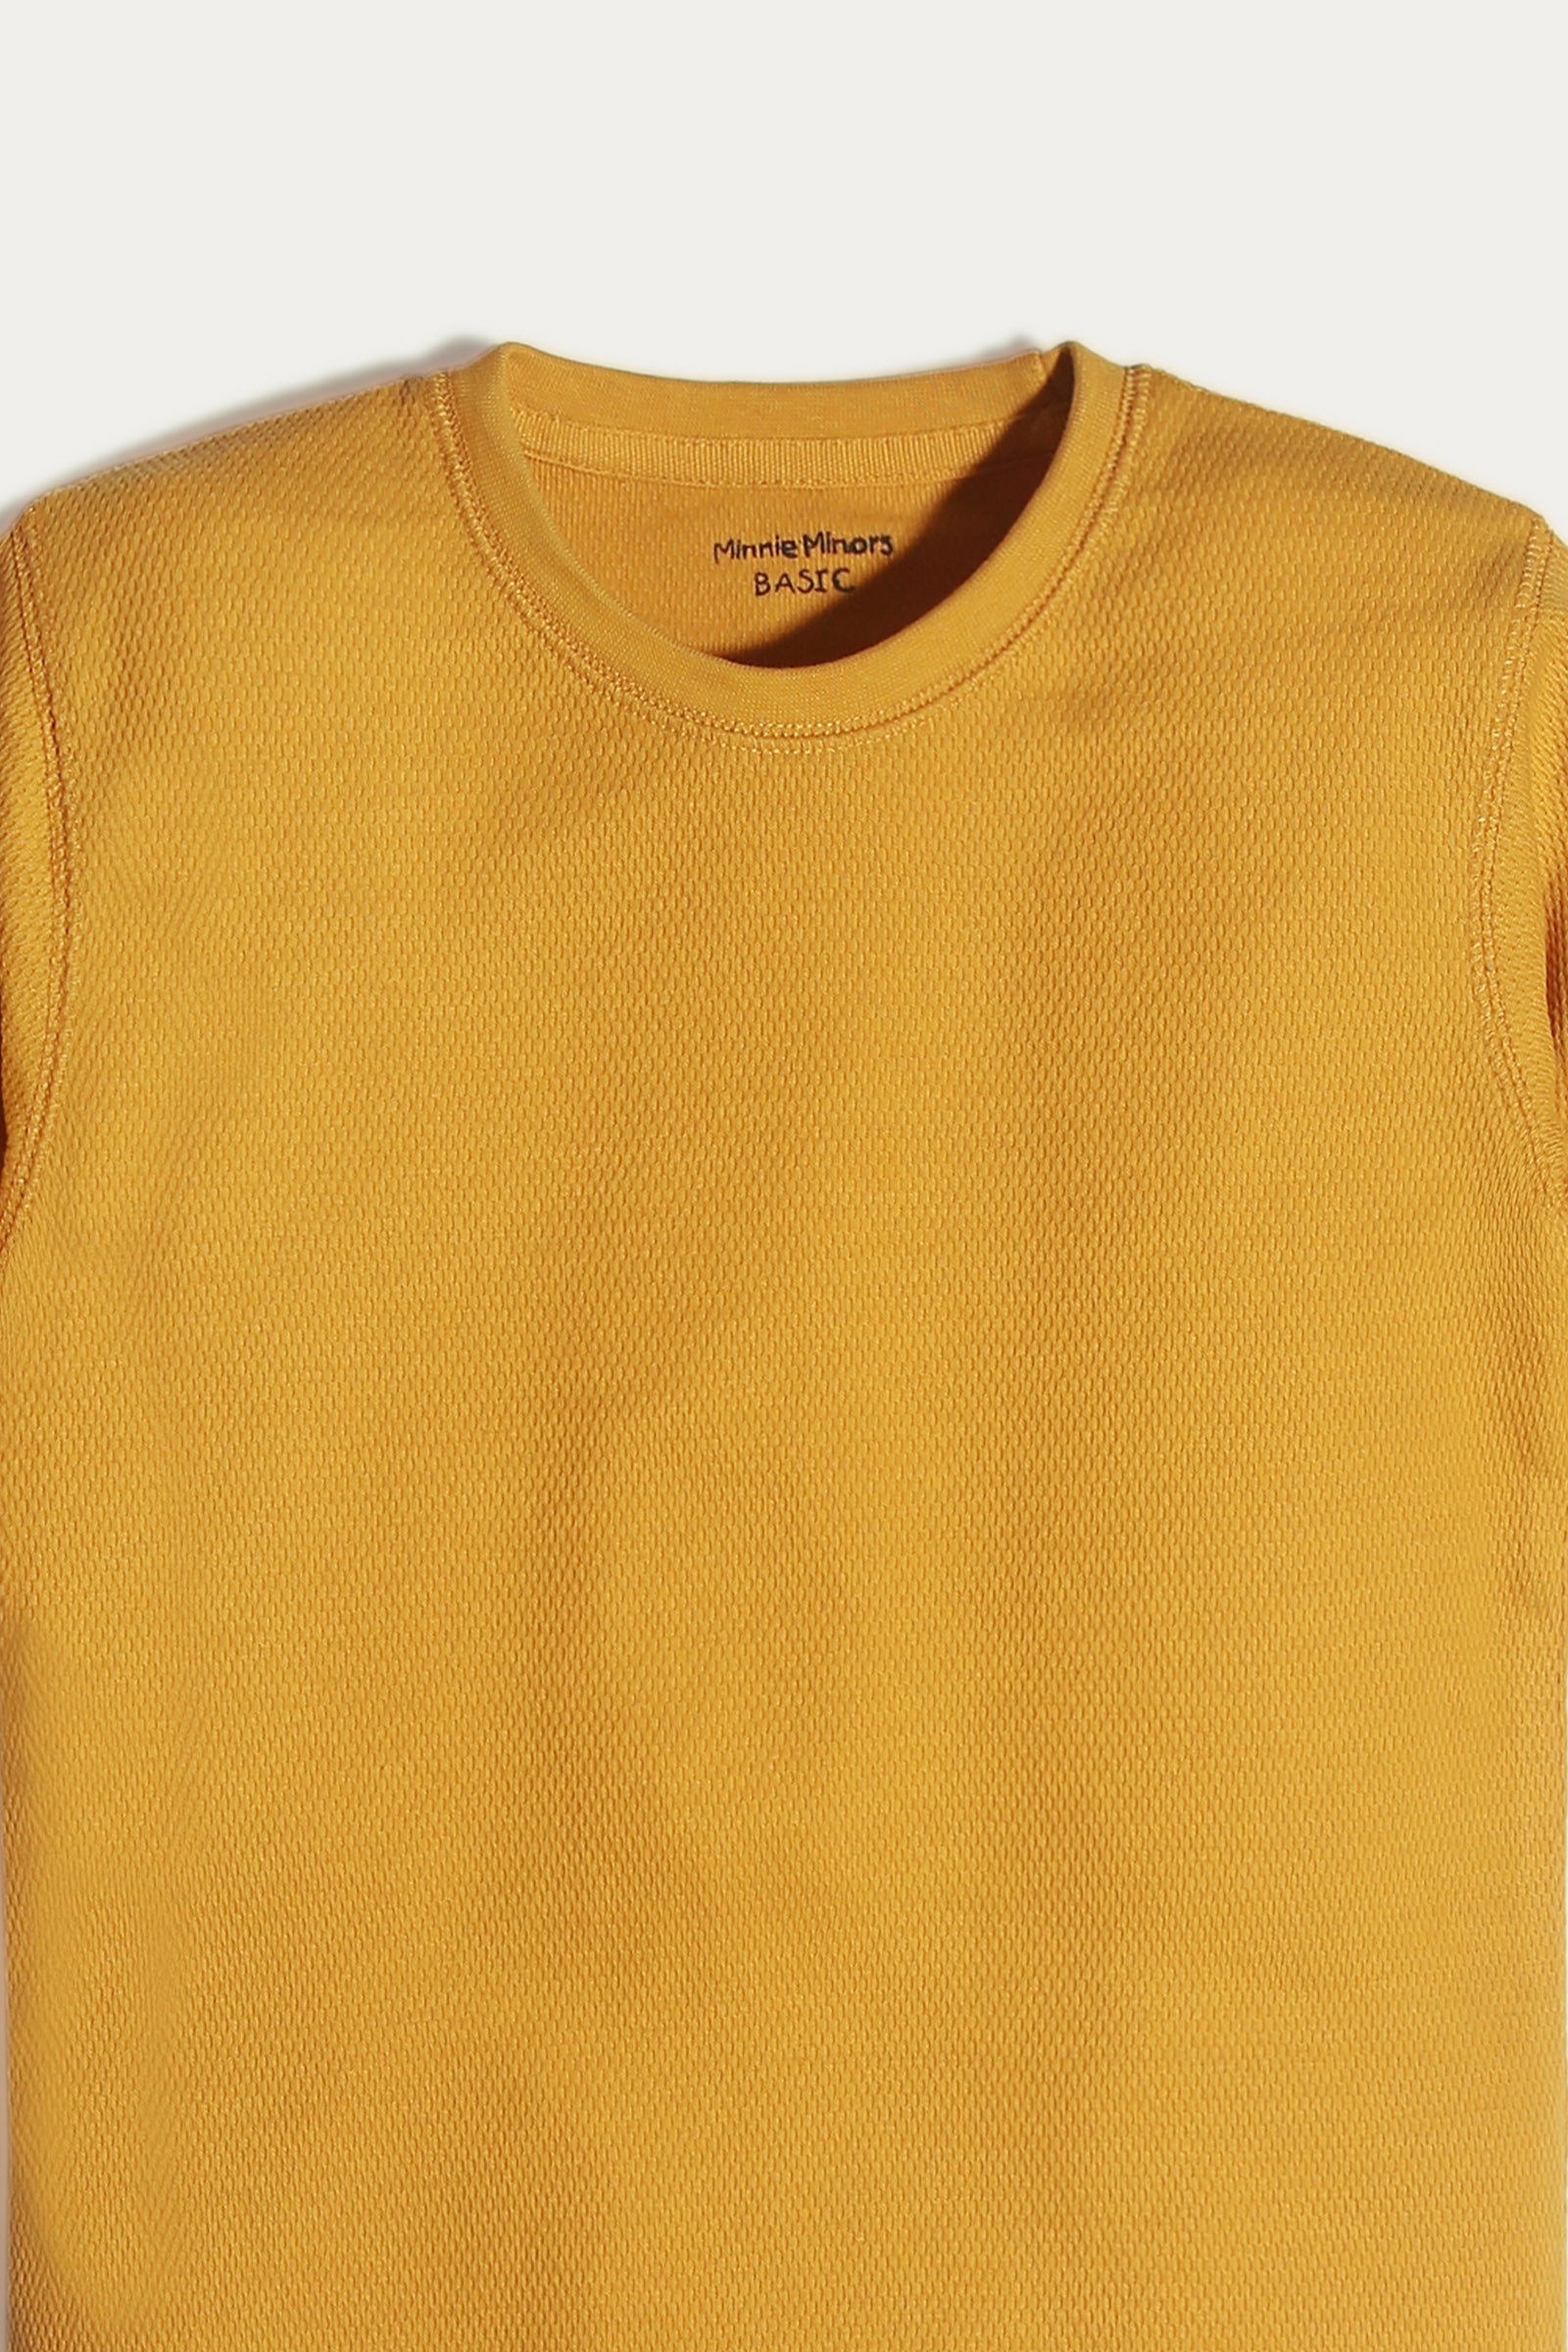 long sleeve t-shirt (BTB-095)